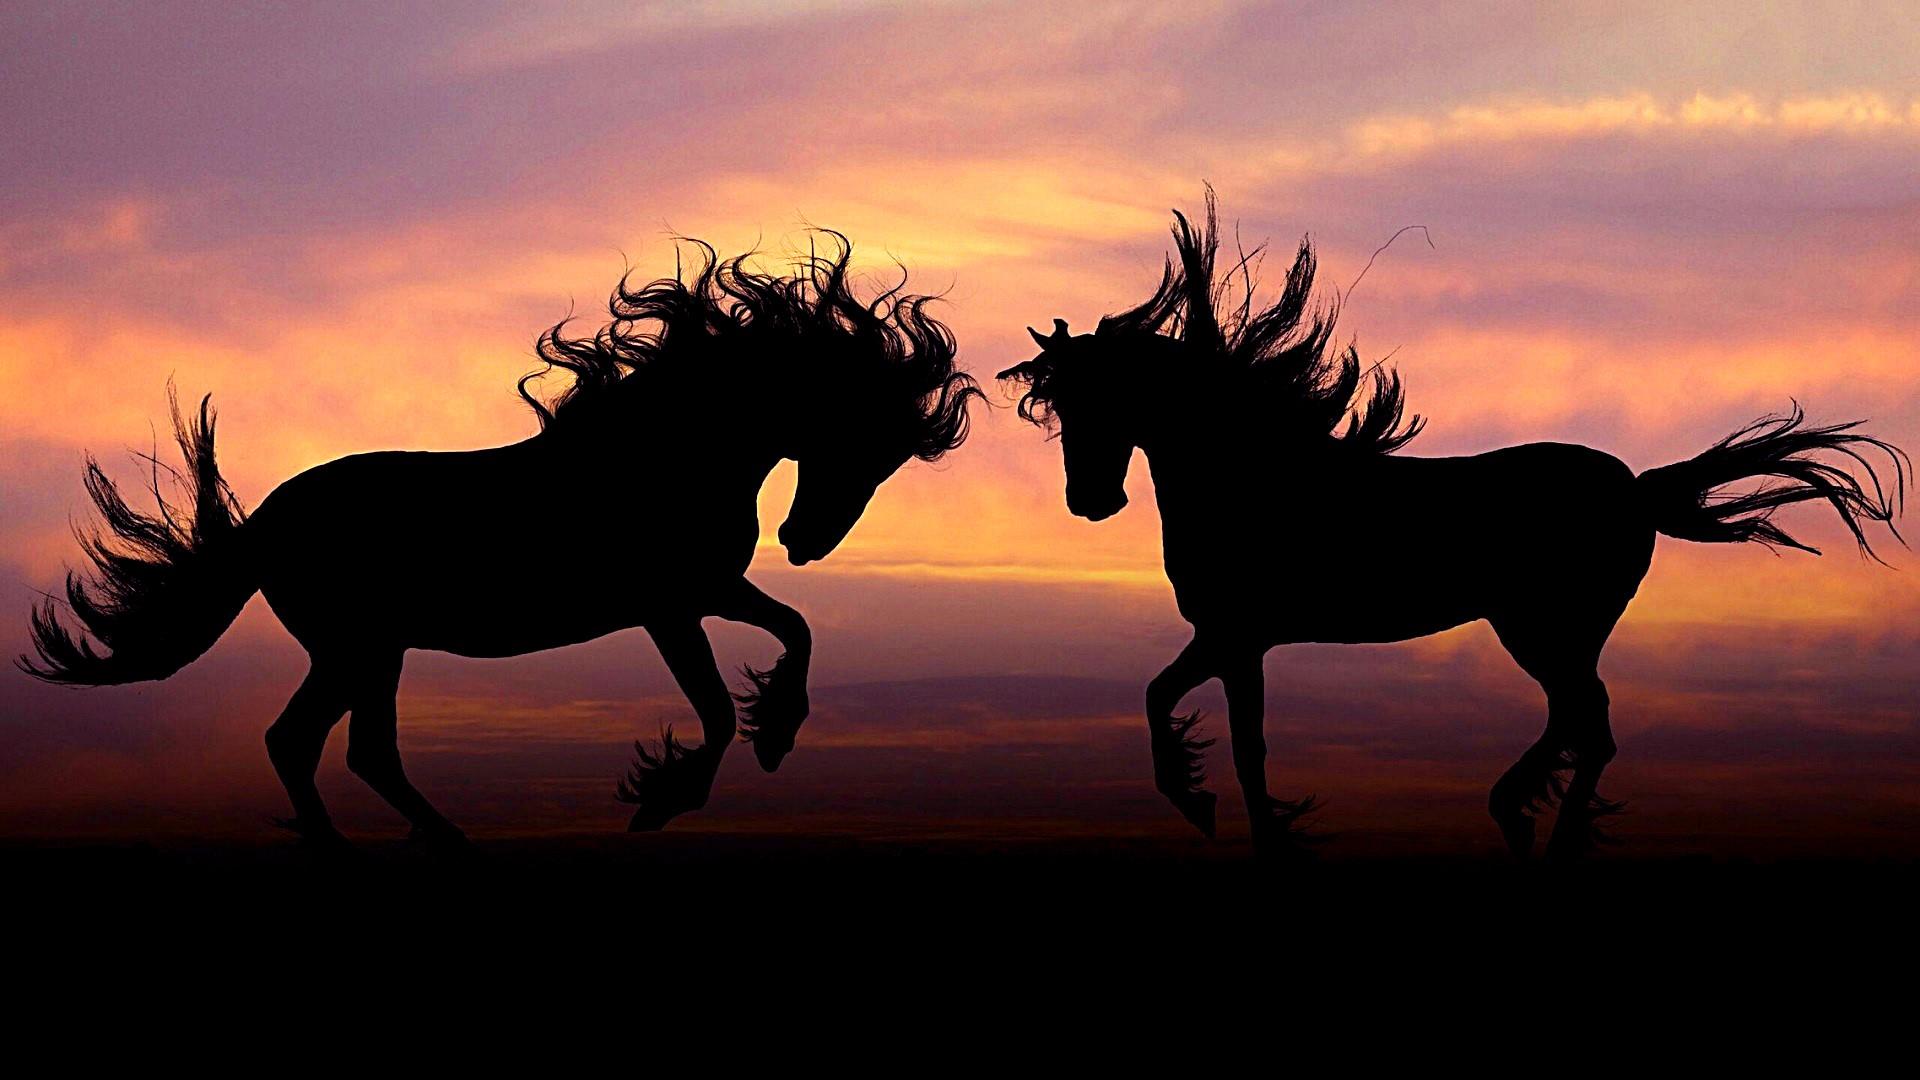 Horse Couple In The Sunset Wallpaper Studio